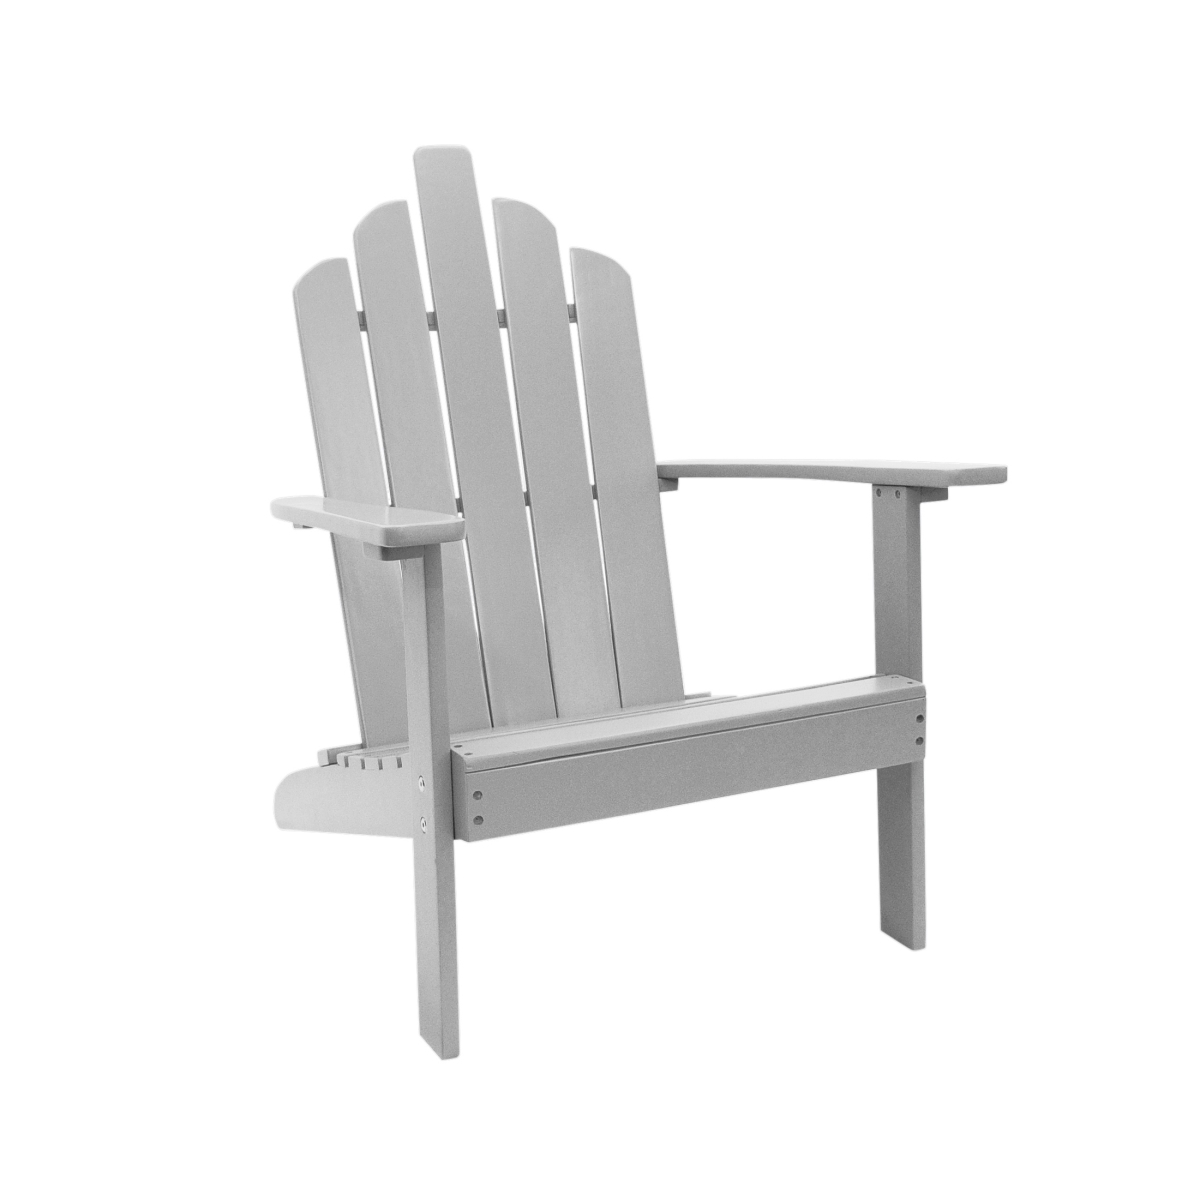 2003111 Outdoor Patio Wood Adirondack Chair, Gray